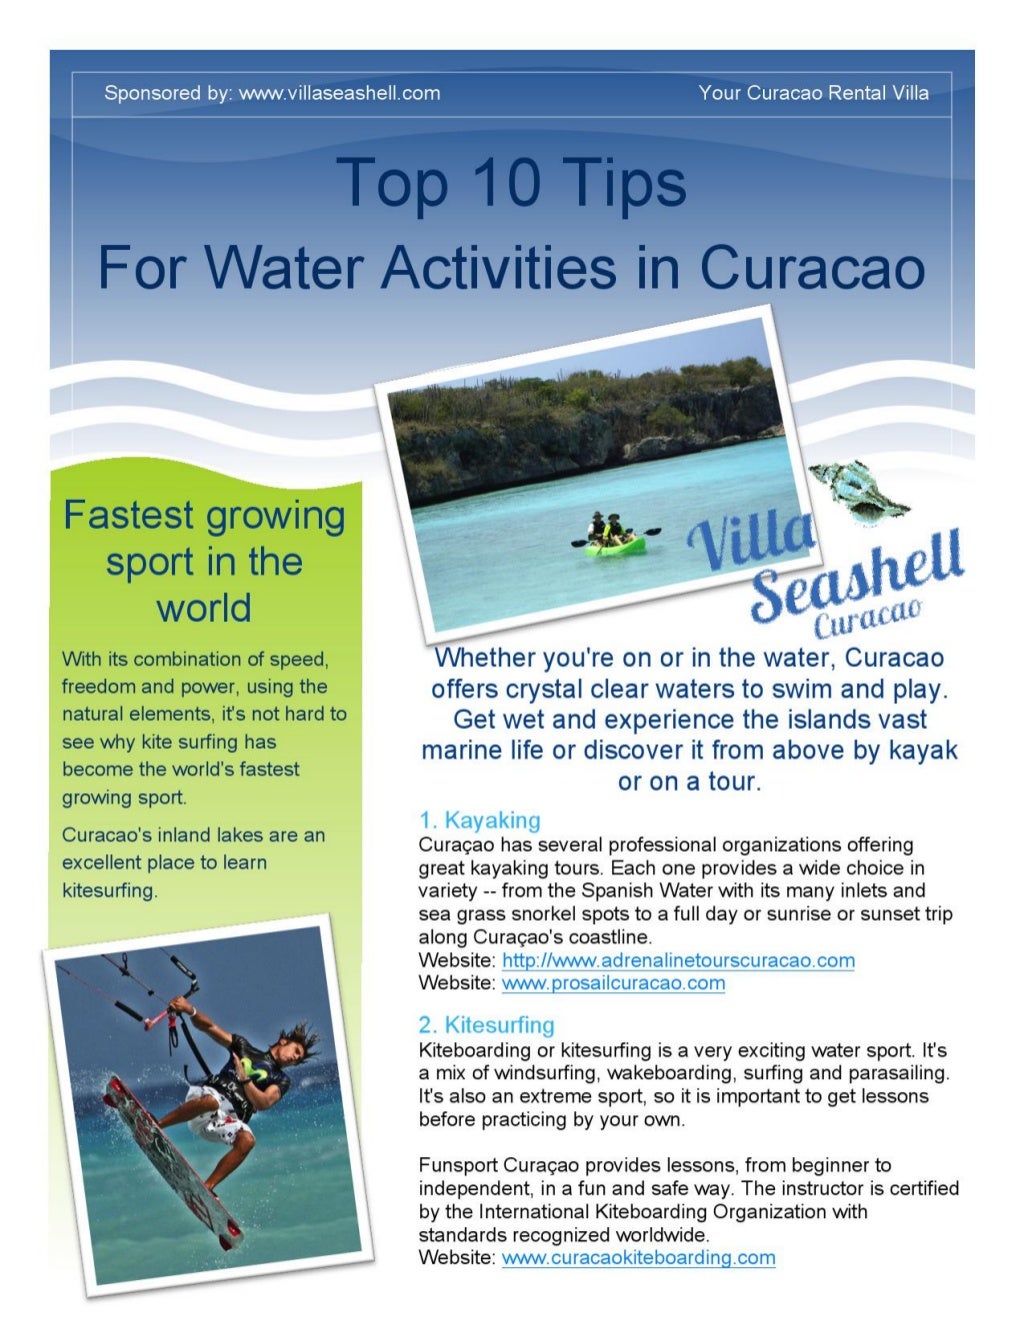 Top 10 Tips For Water Activities in Curacao